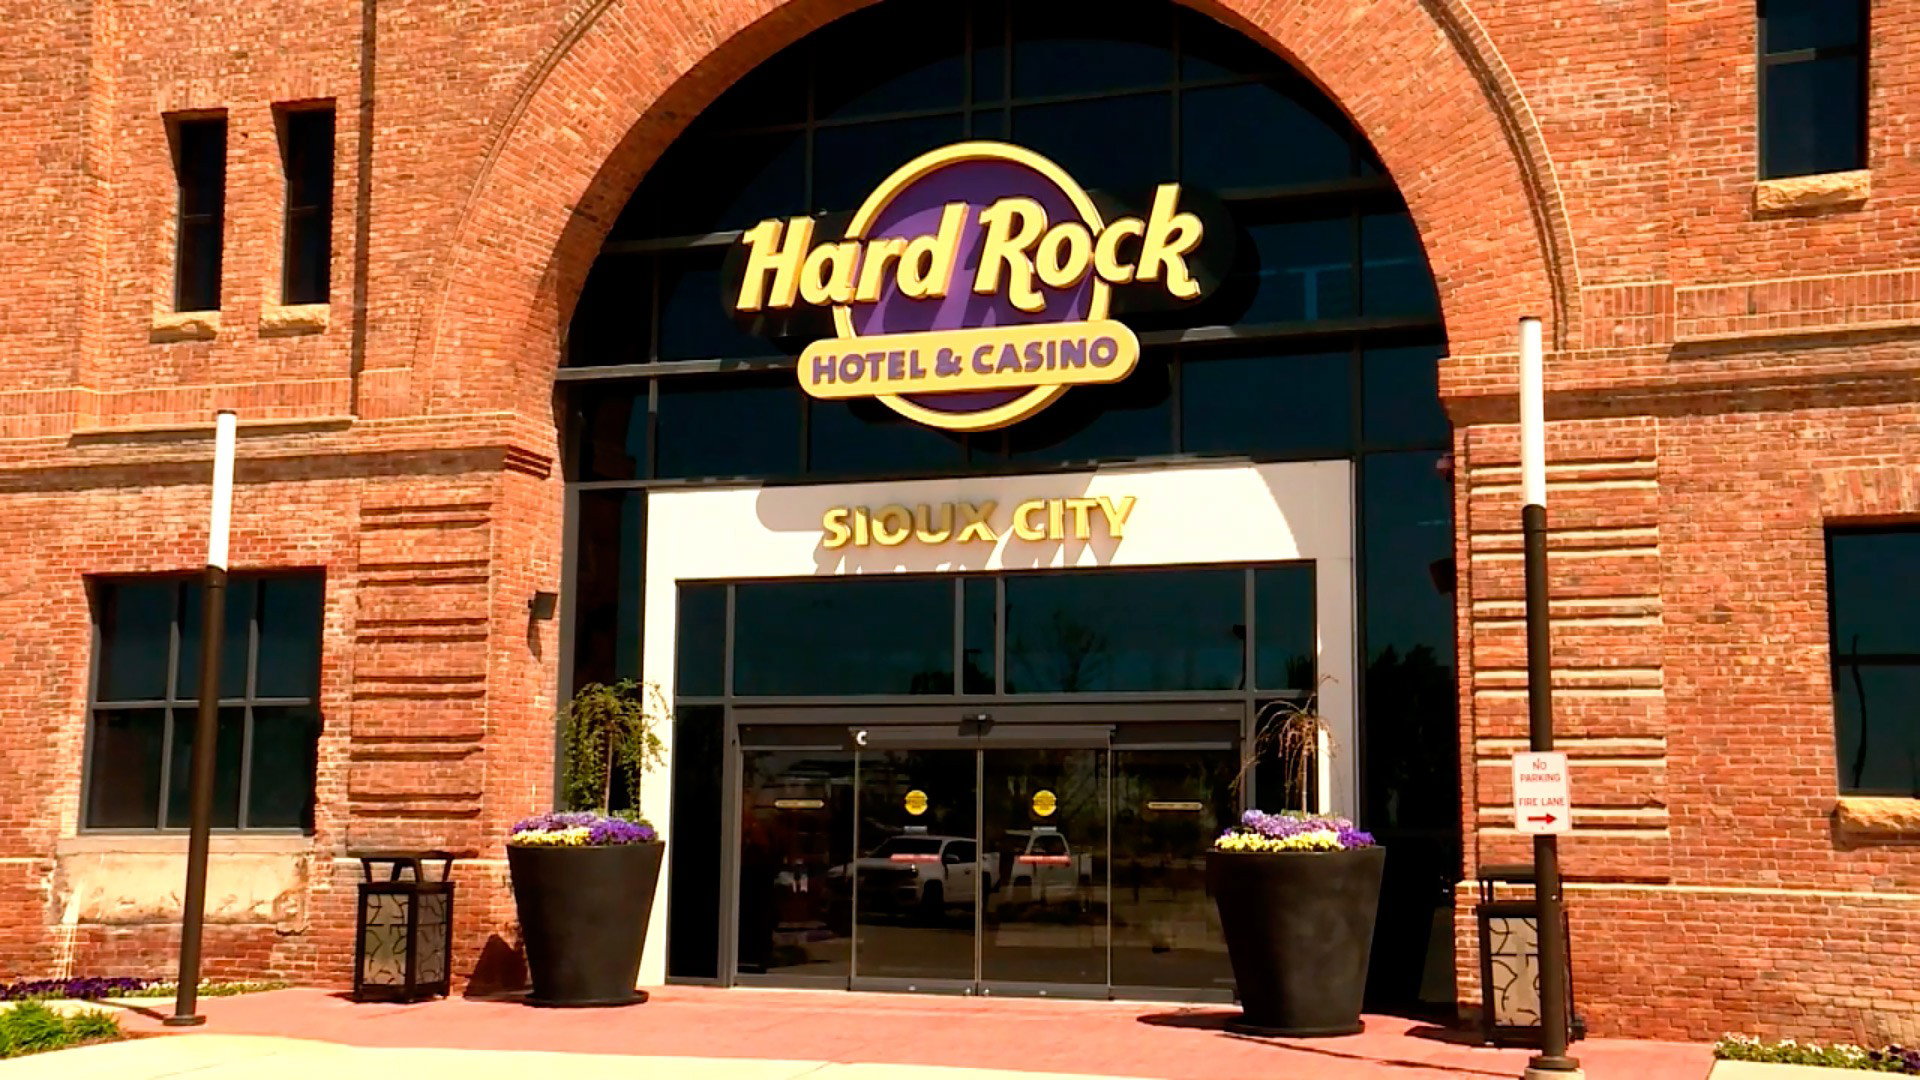 hard rock casino in sioux city iowa